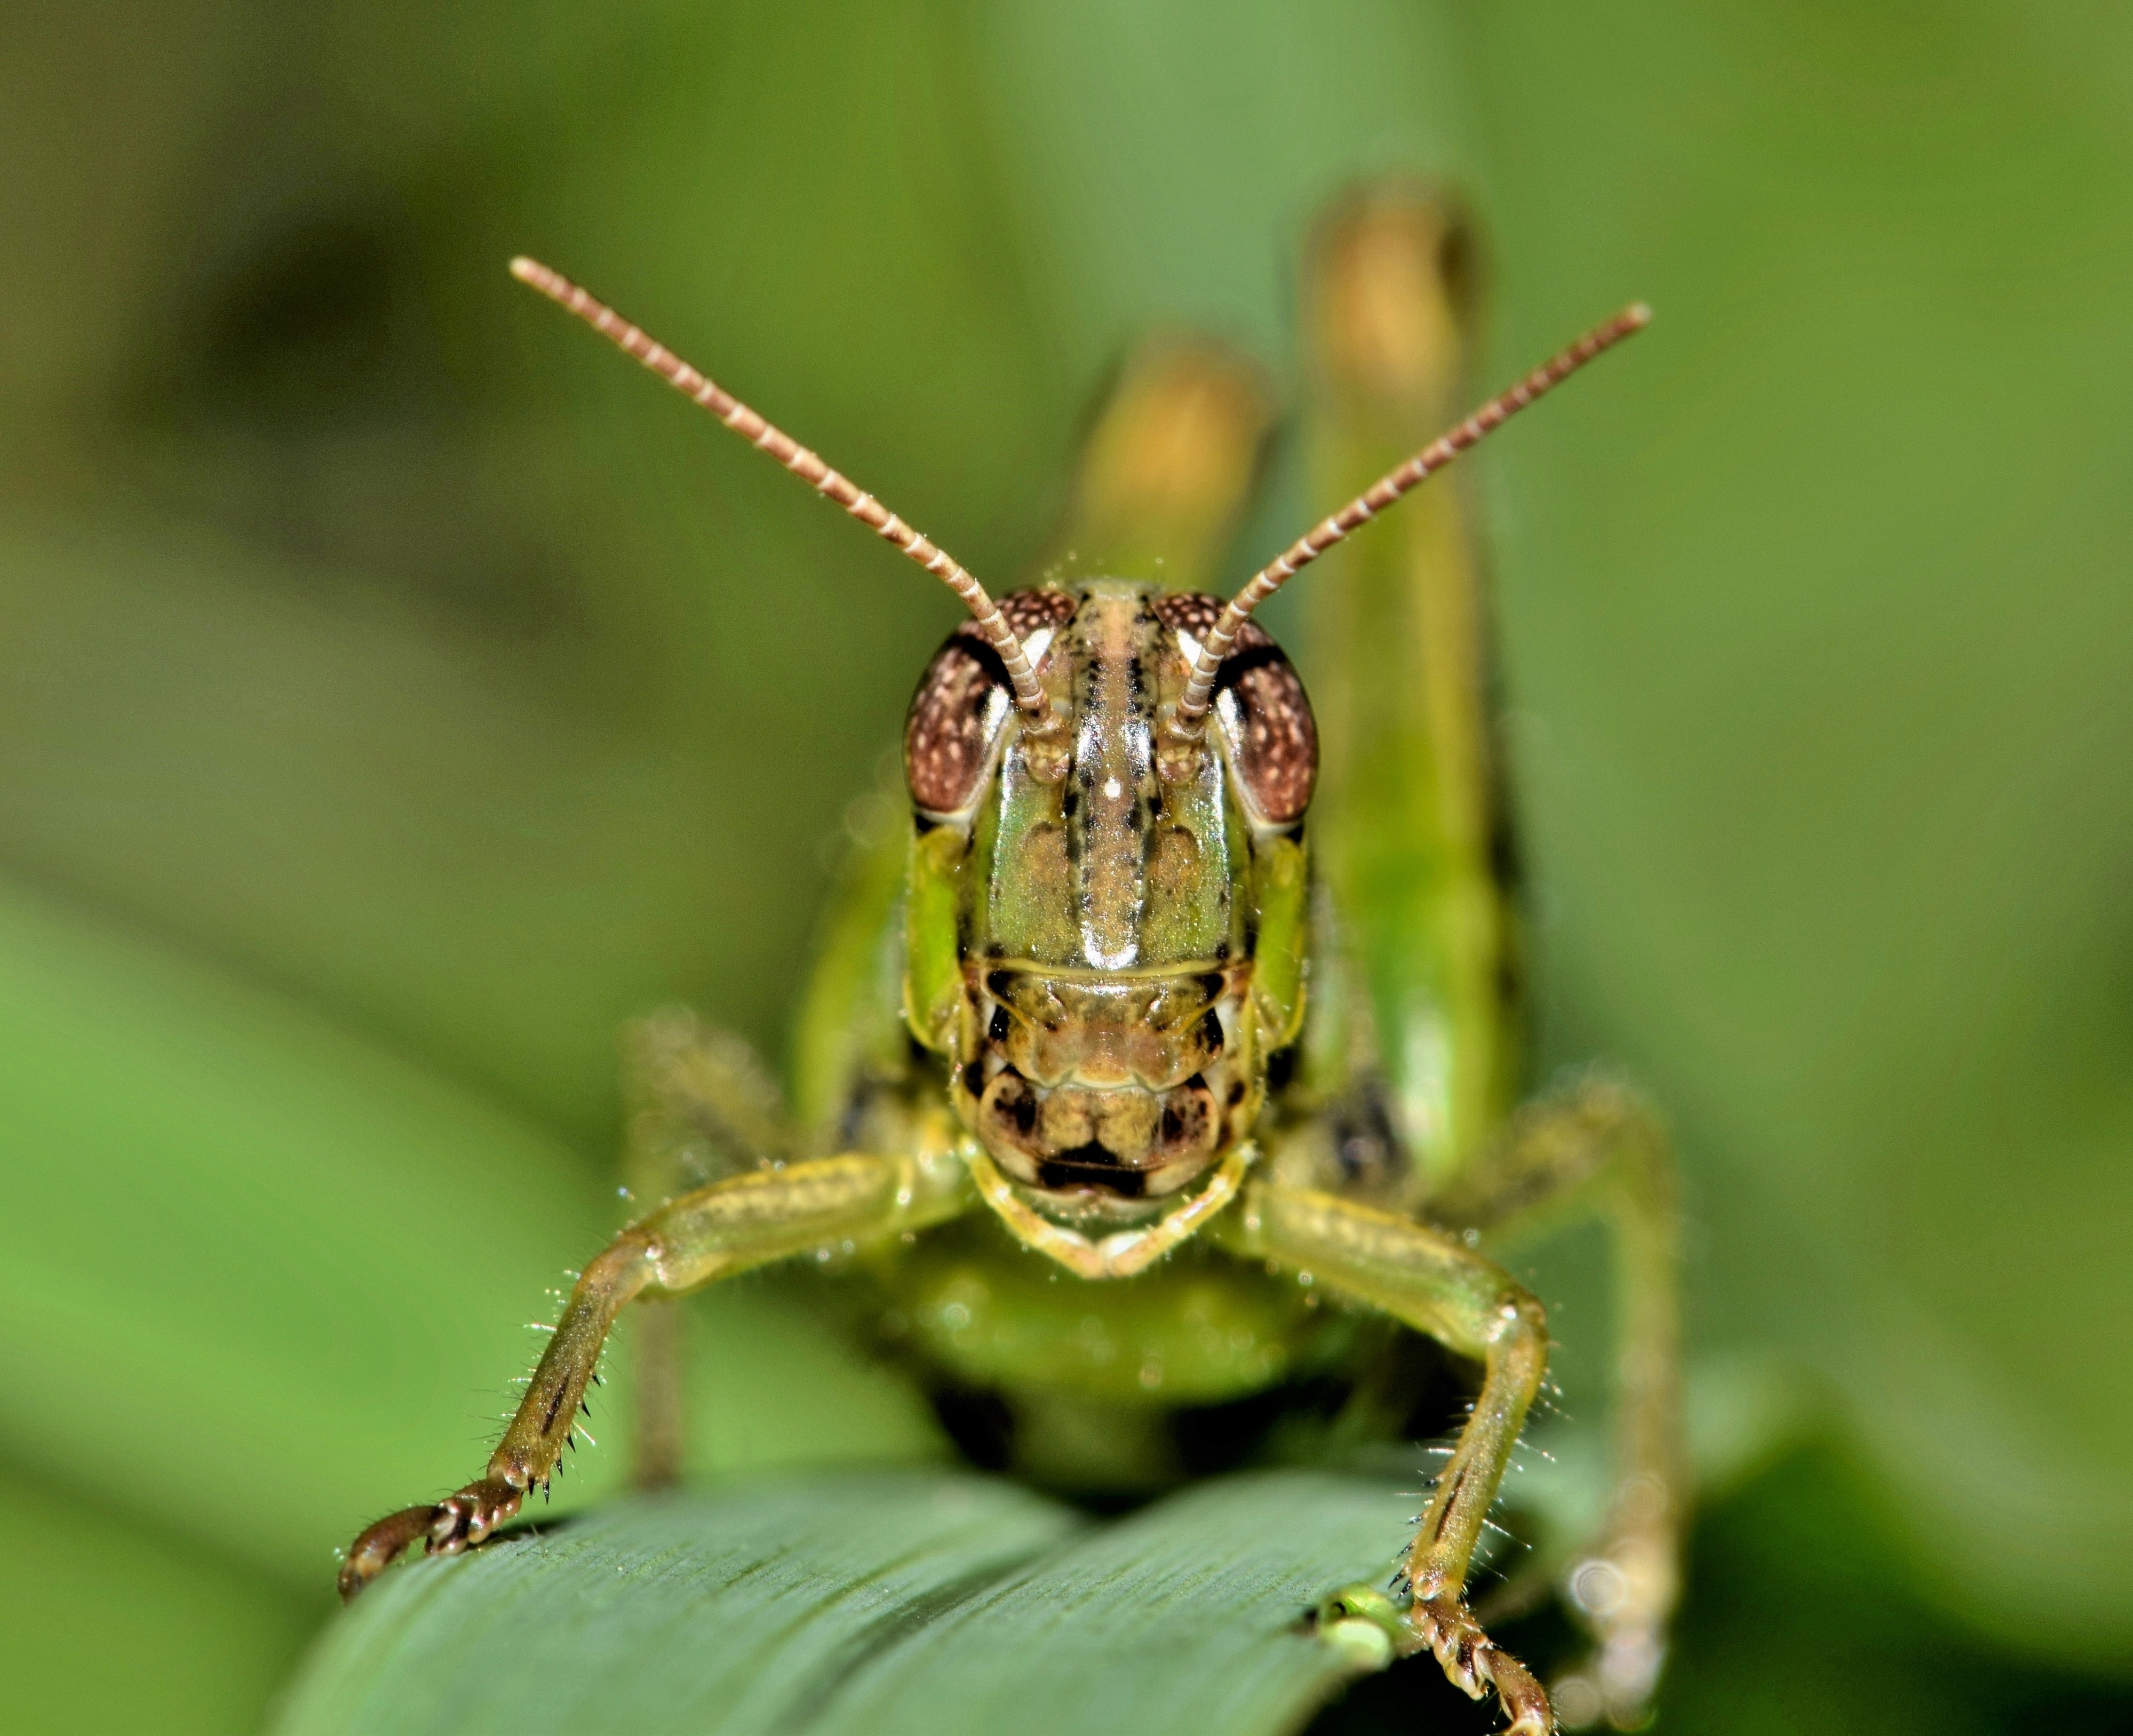 green Grasshopper in closeup photography